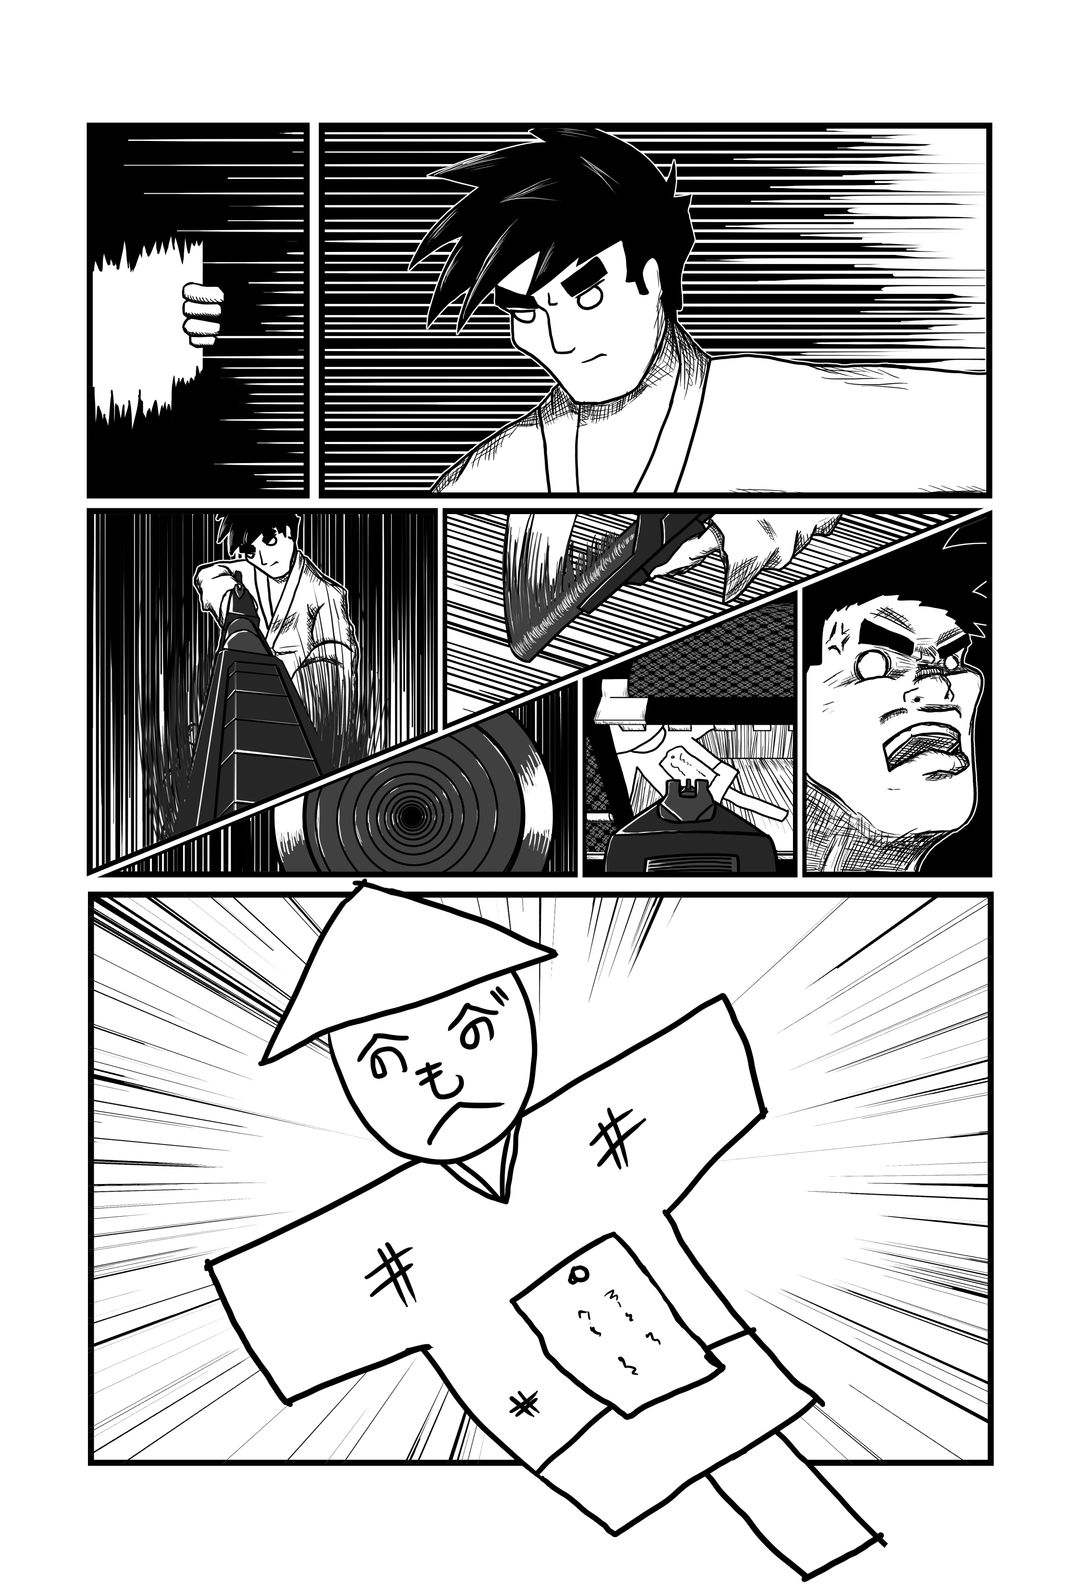 Shotgun Samurai 10 panel 1